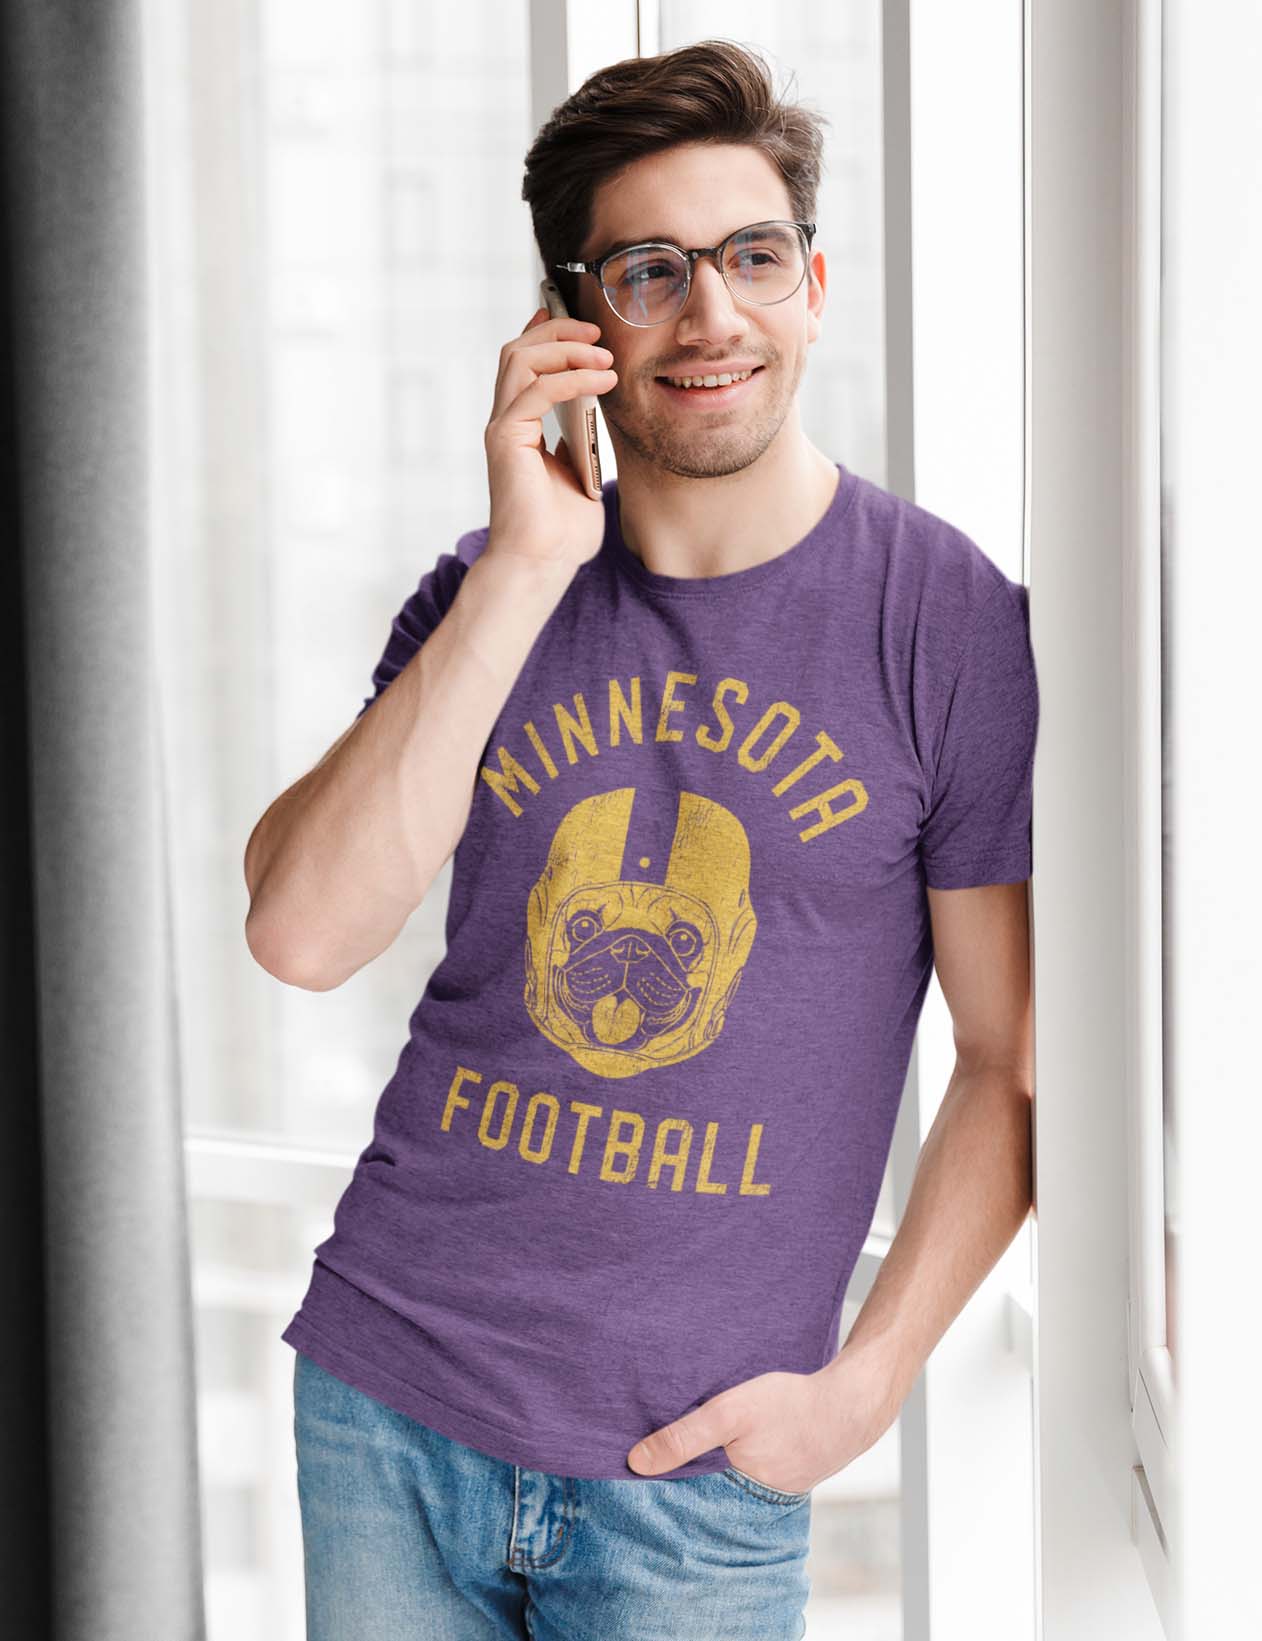 Minnesota Football Pug T-Shirt